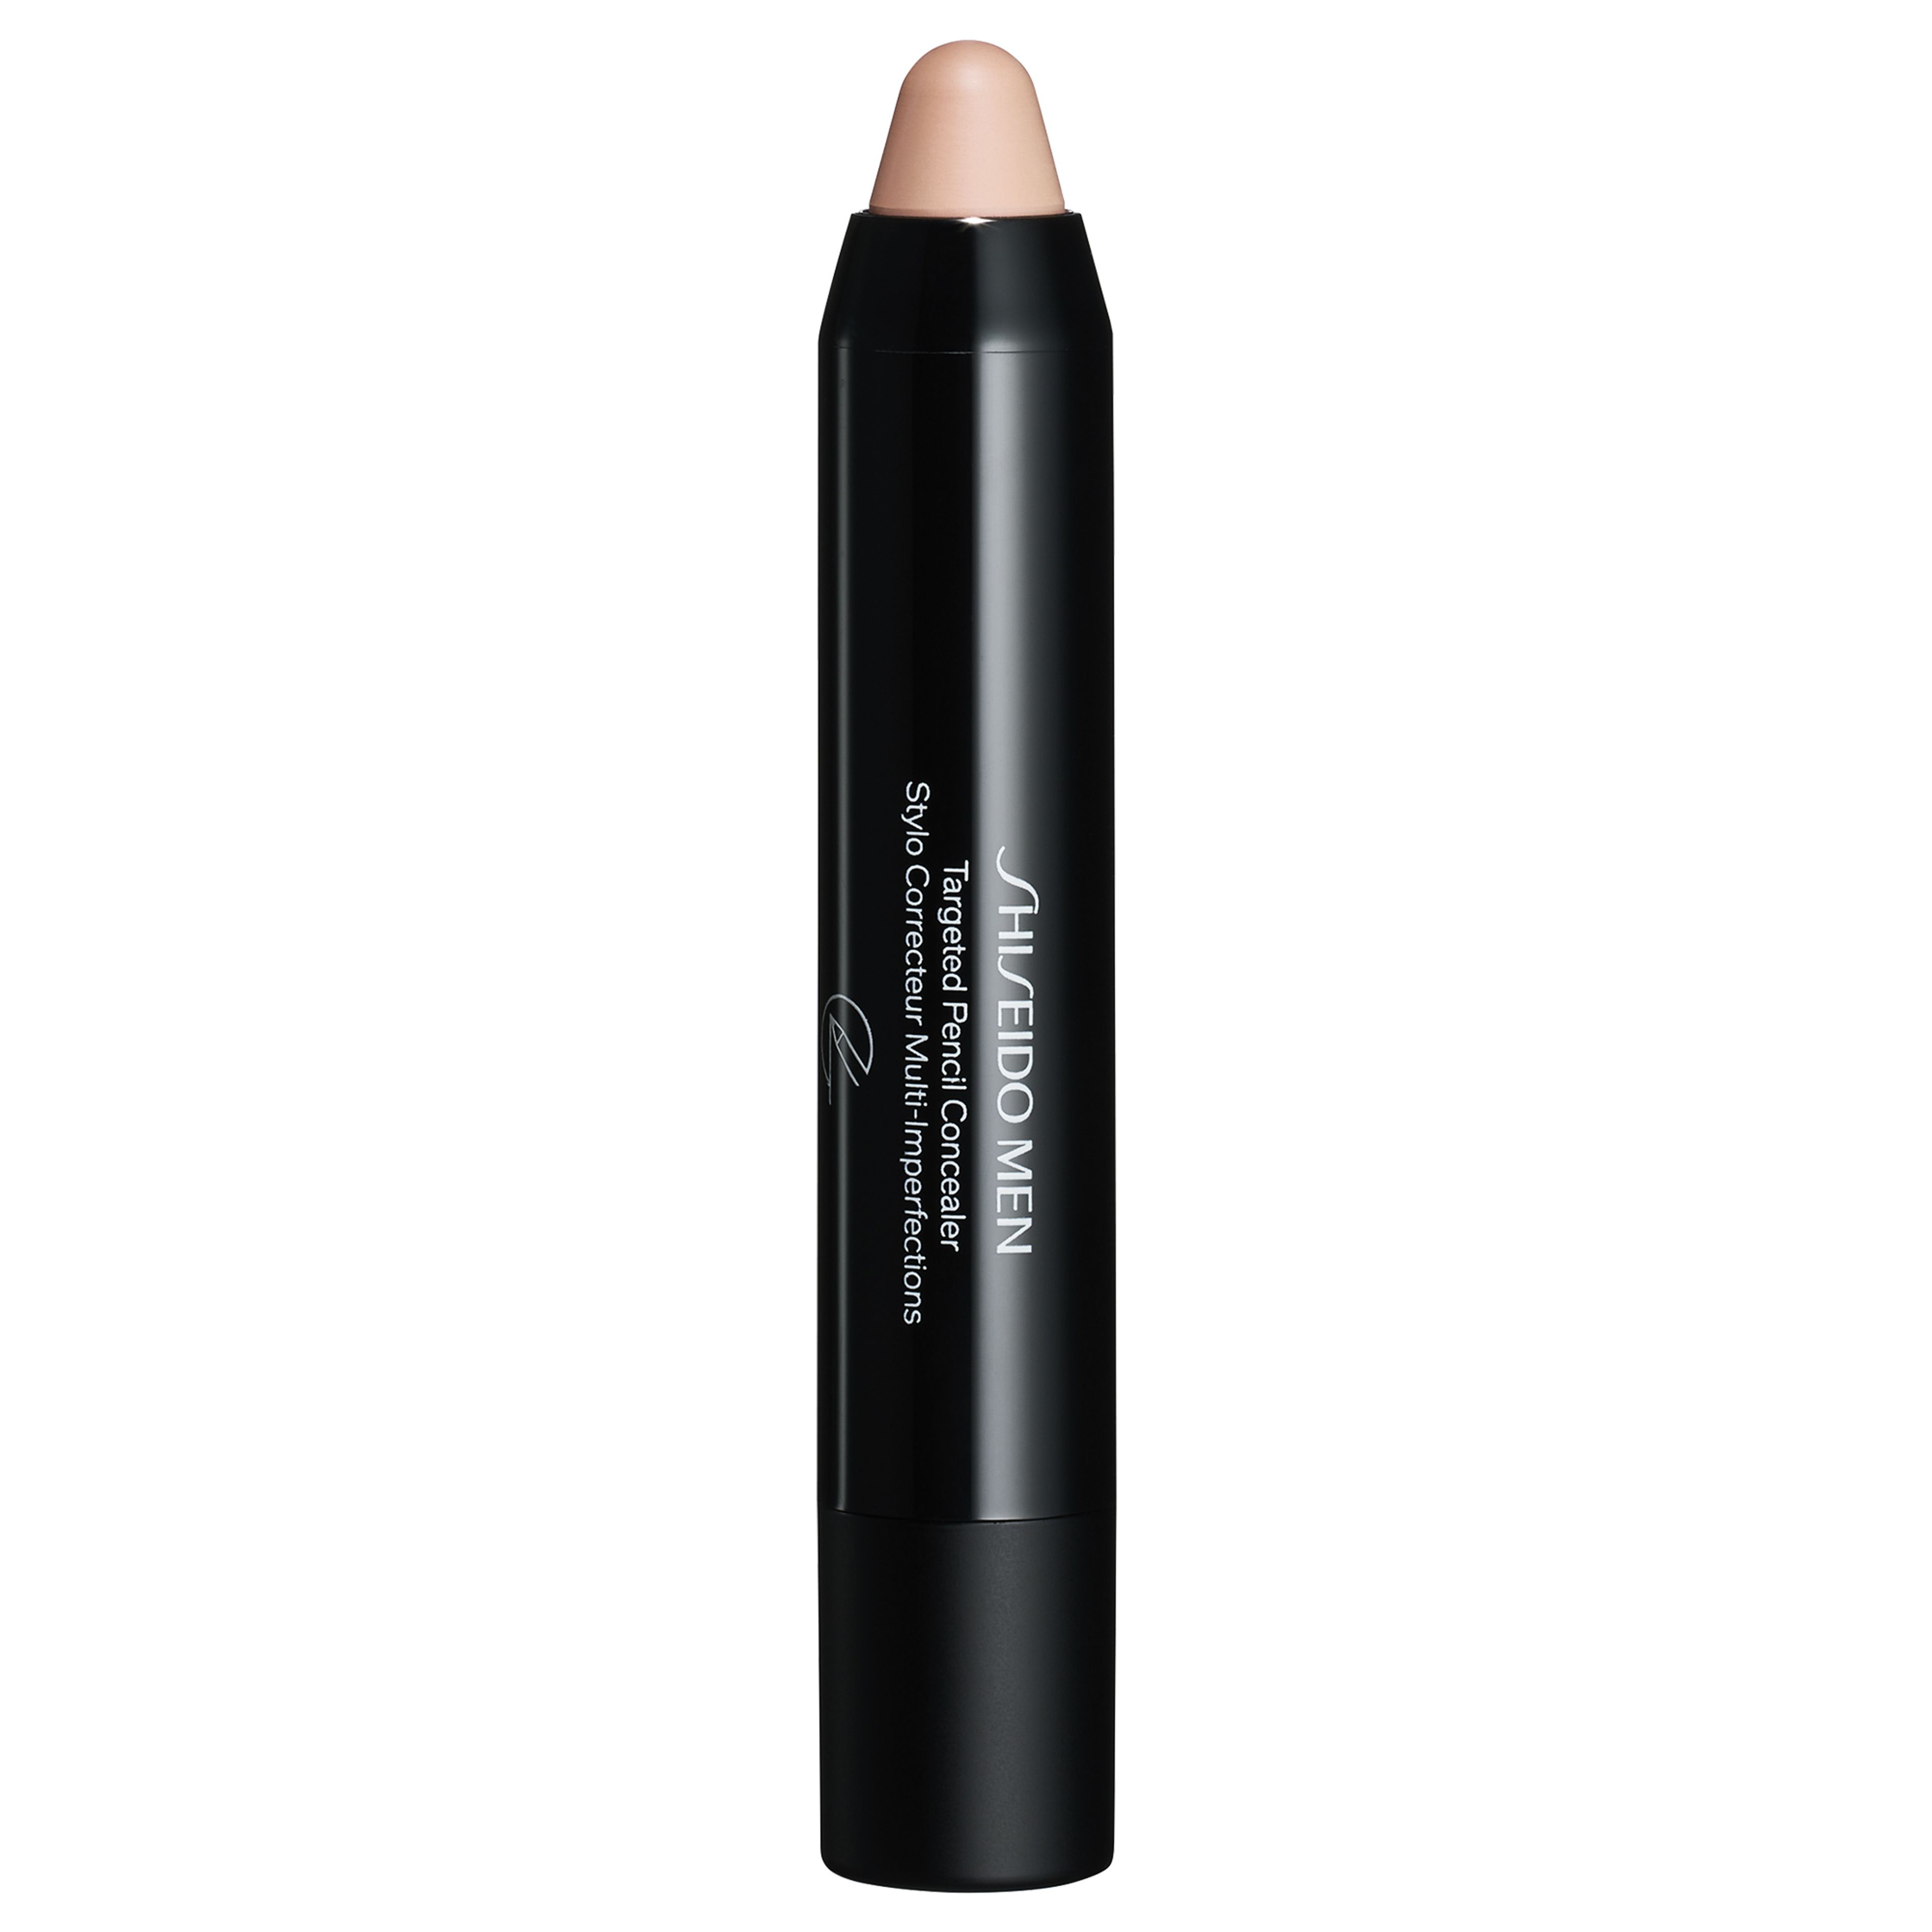 Shiseido Targeted Pencil Concealer 2